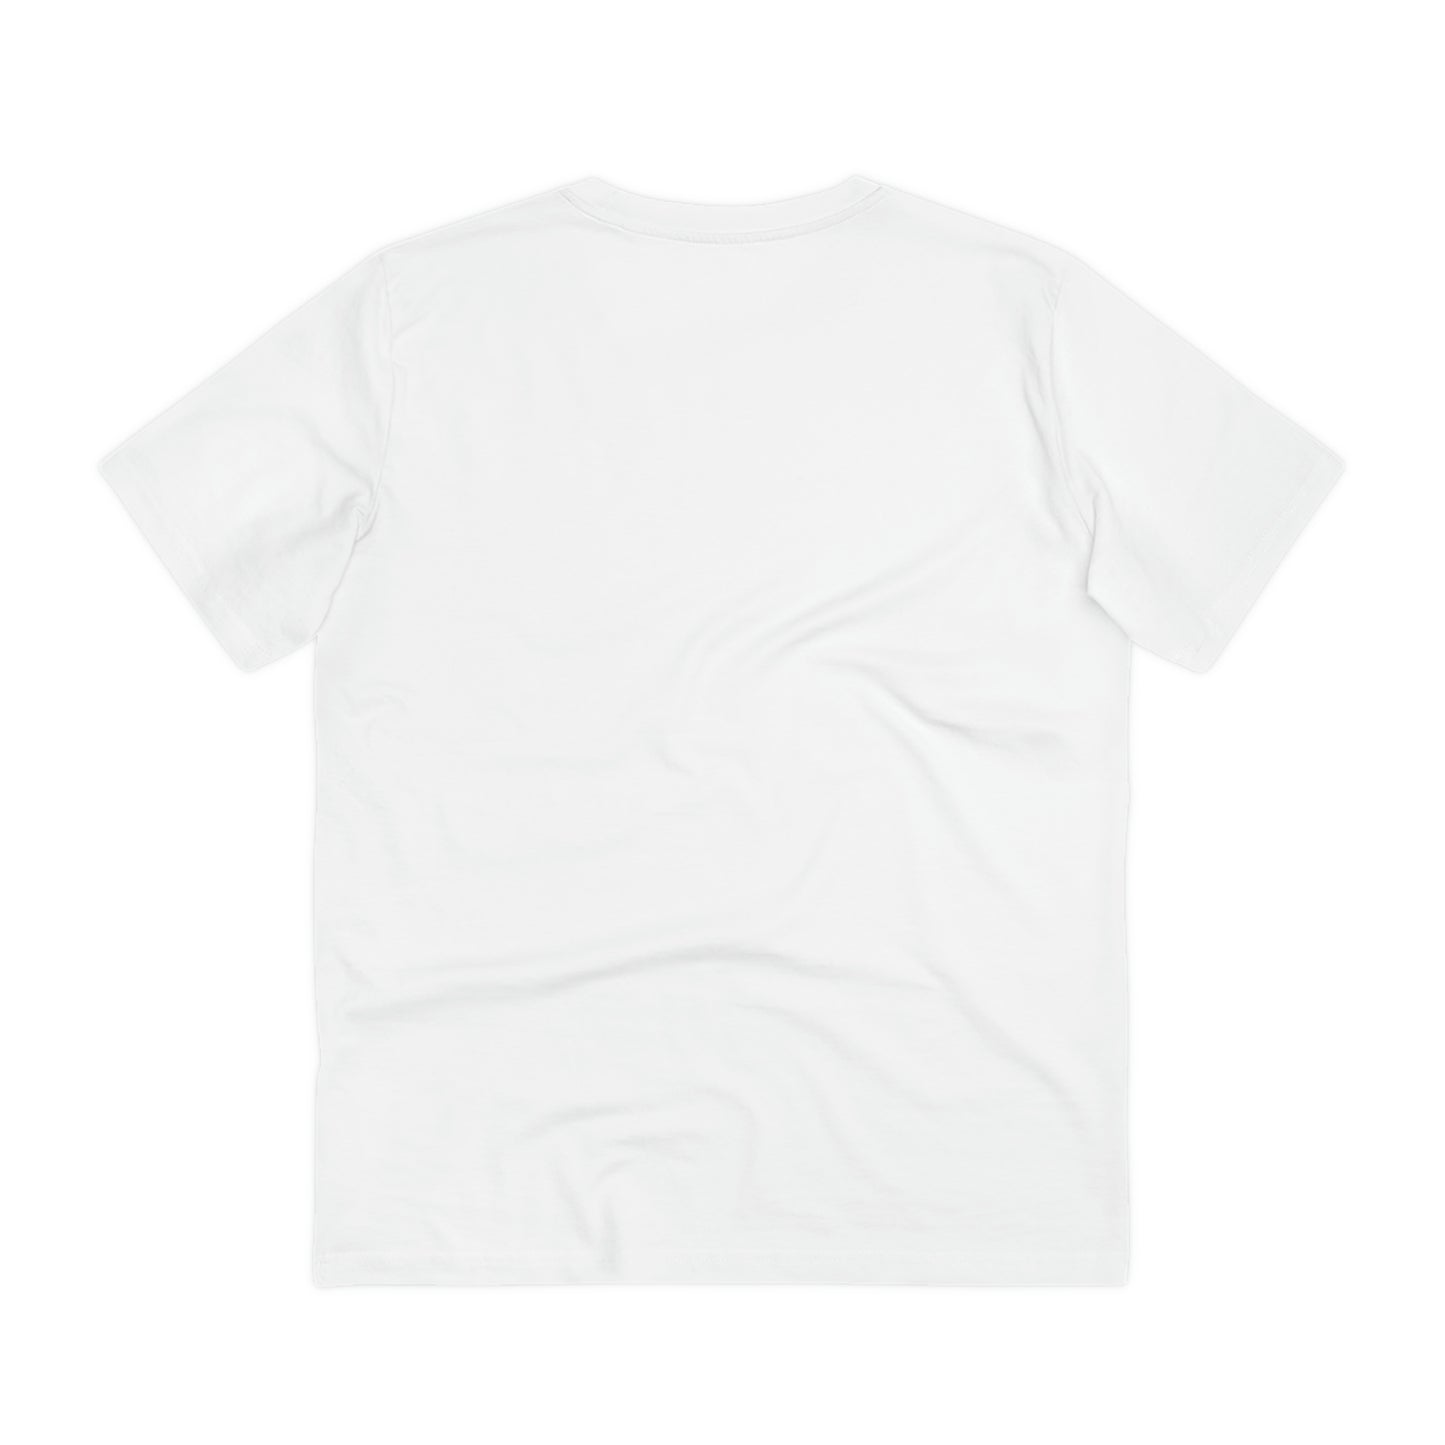 FCK AFD Organic T-shirt - Unisex